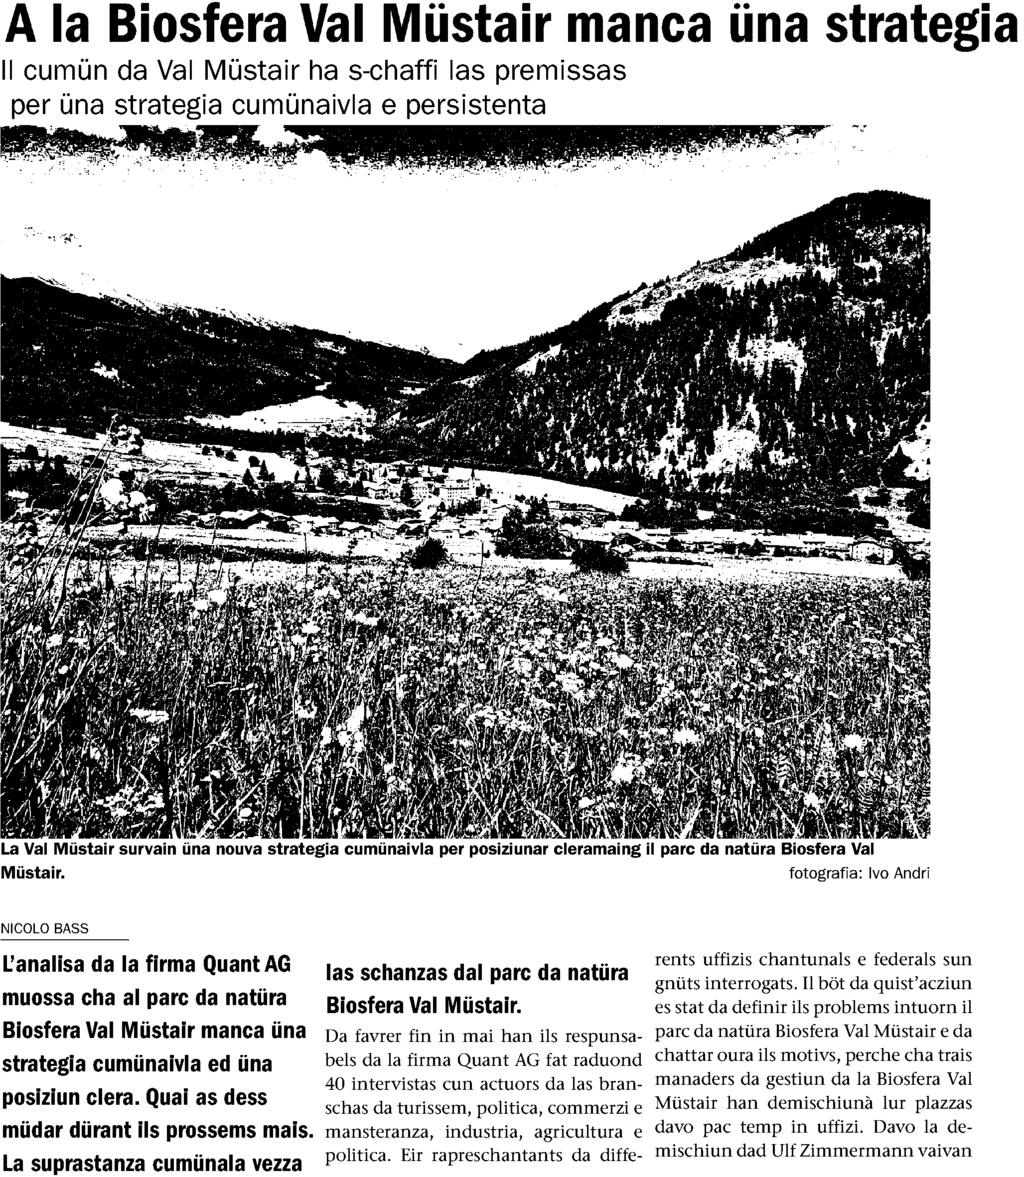 Bericht Seite: 9/27 Engadiner Post / Posta Ladina 7500 St. Moritz 081/ 837 90 81 www.engadinerpost.